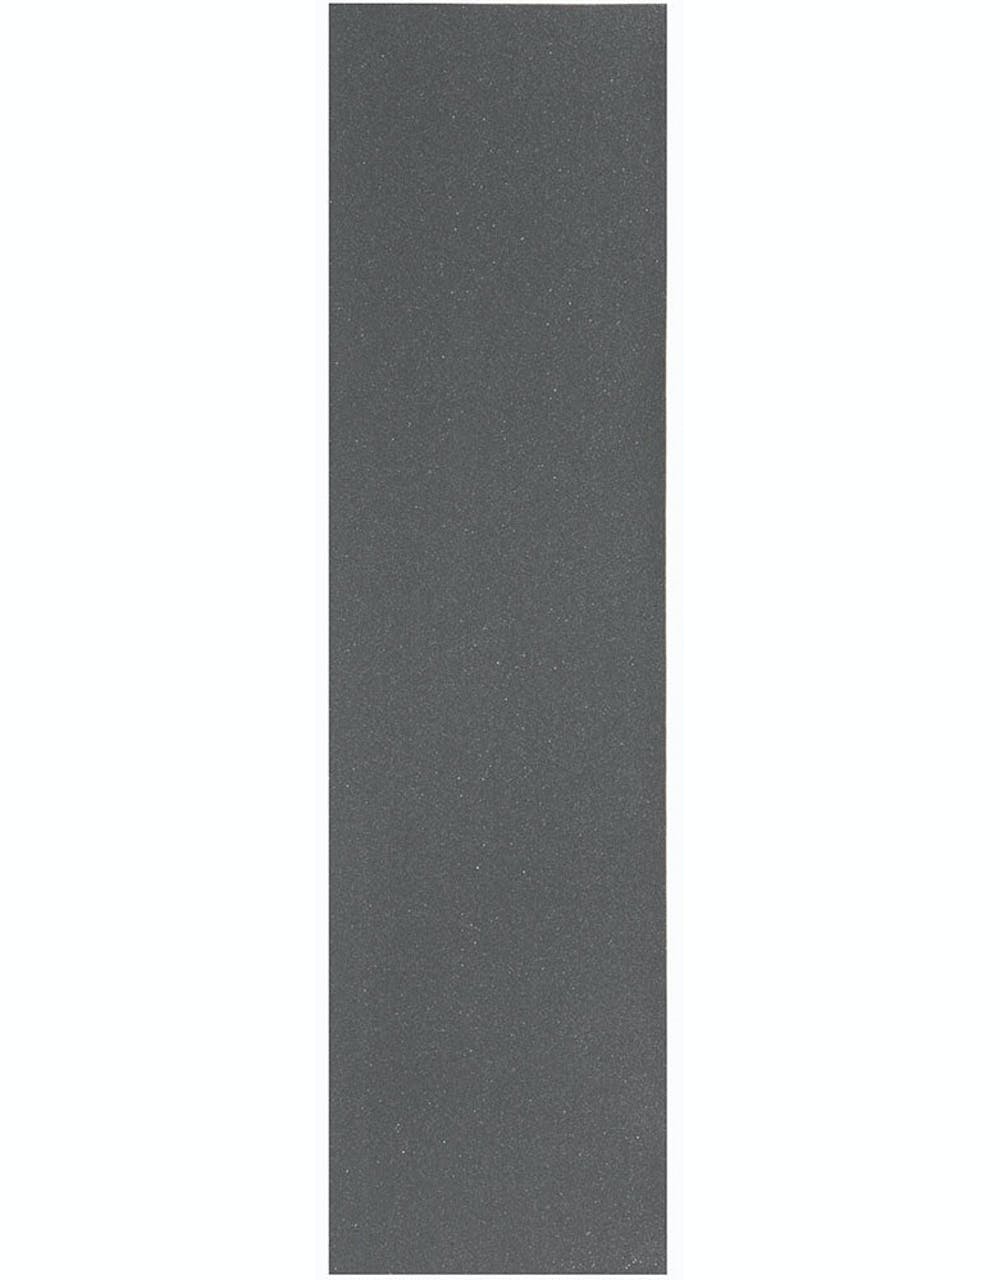 Jessup 9" Grip Tape Sheet - Sidewalk Grey